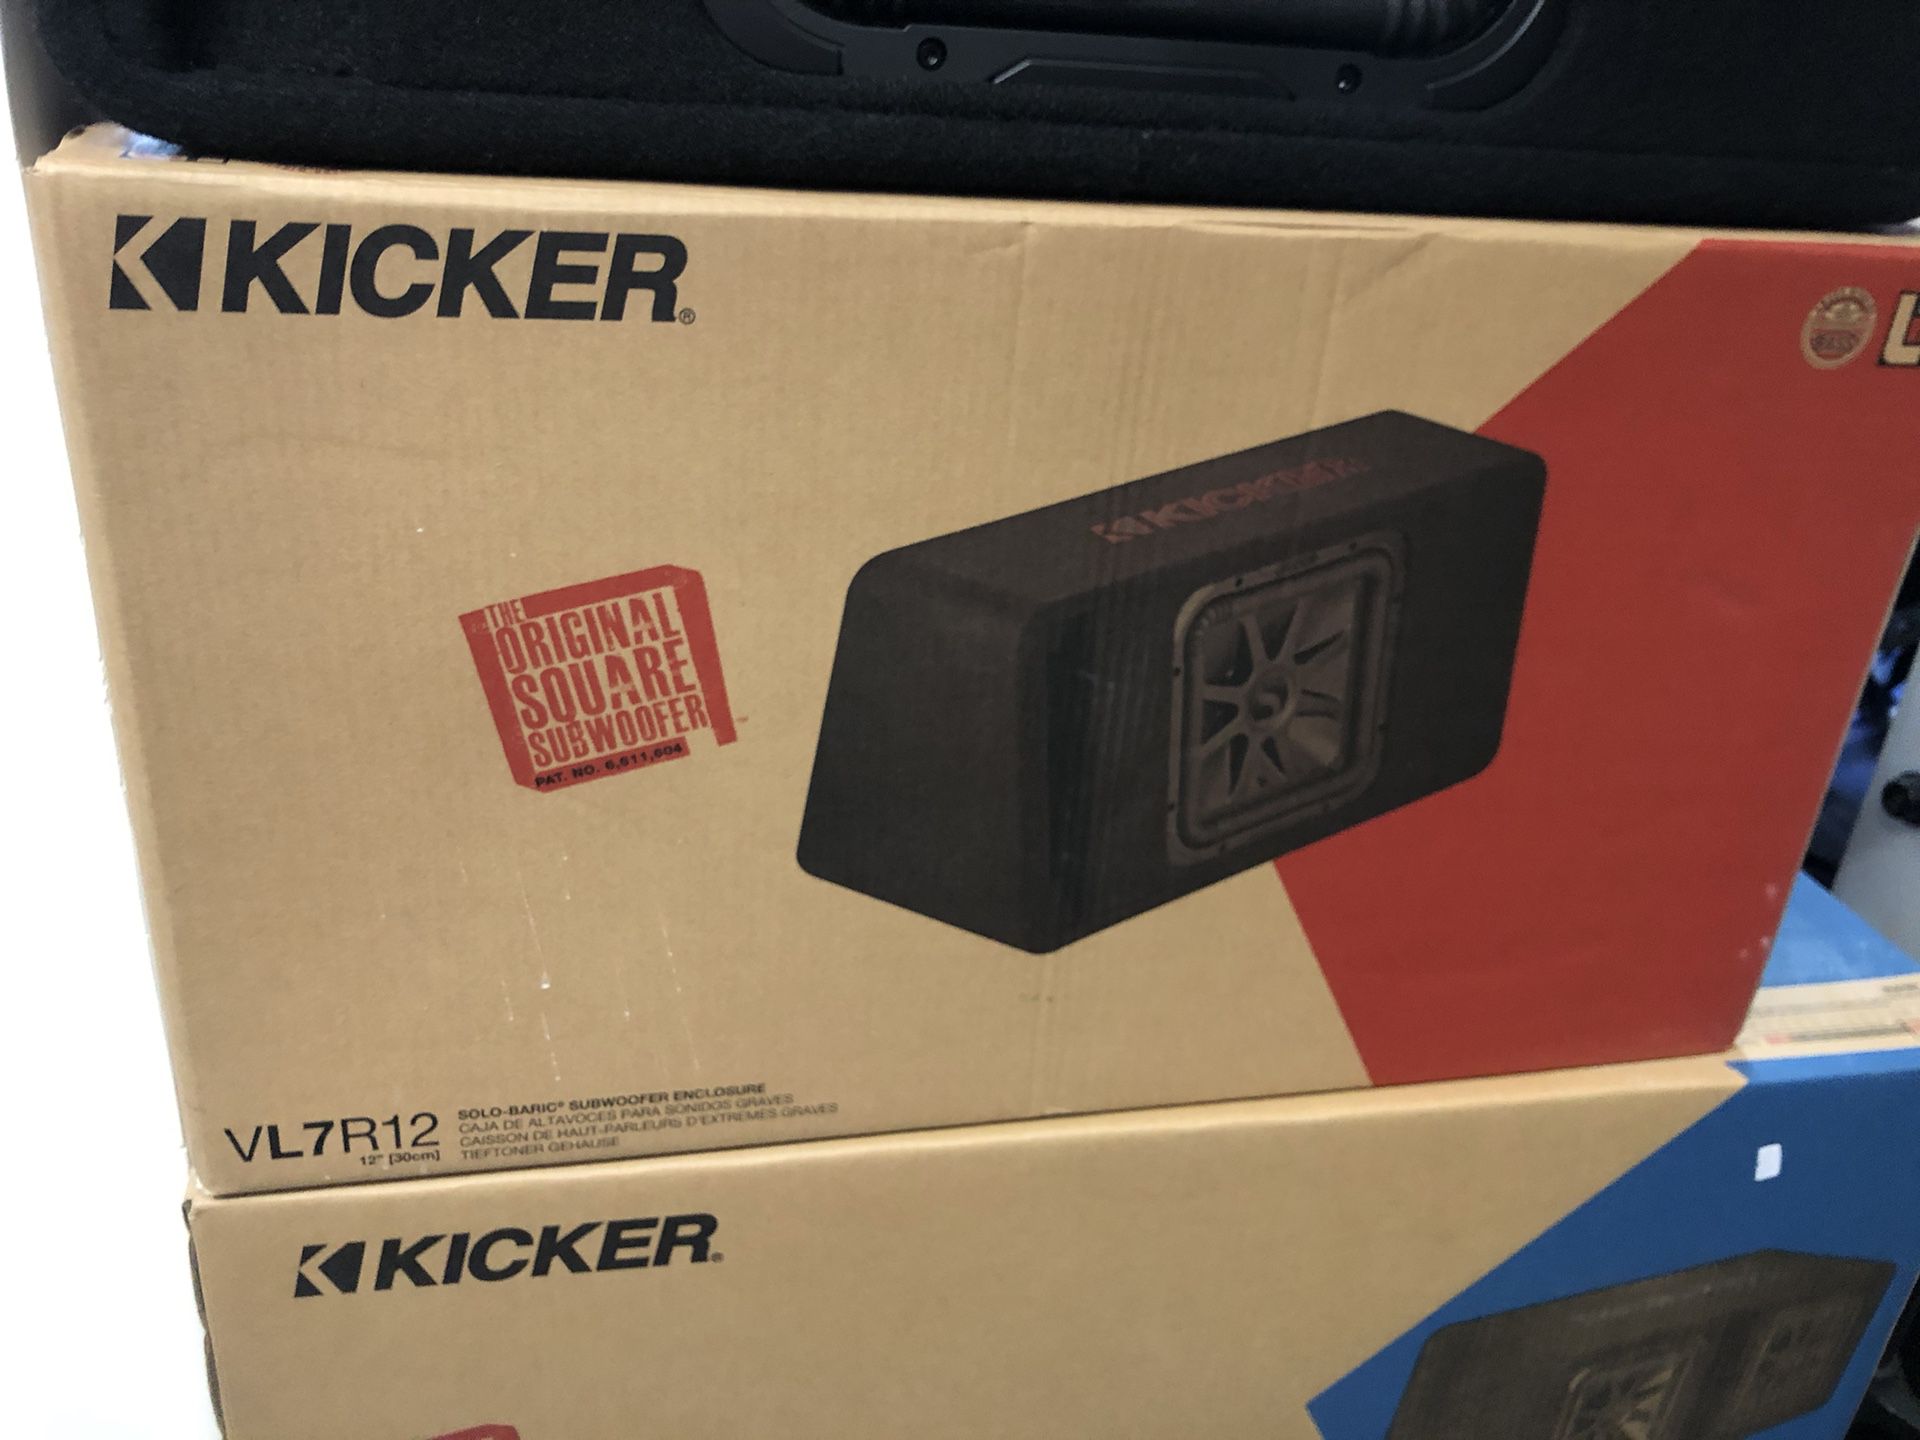 Kicker L7r12 In Ported Subwoofer Box By Kicker 